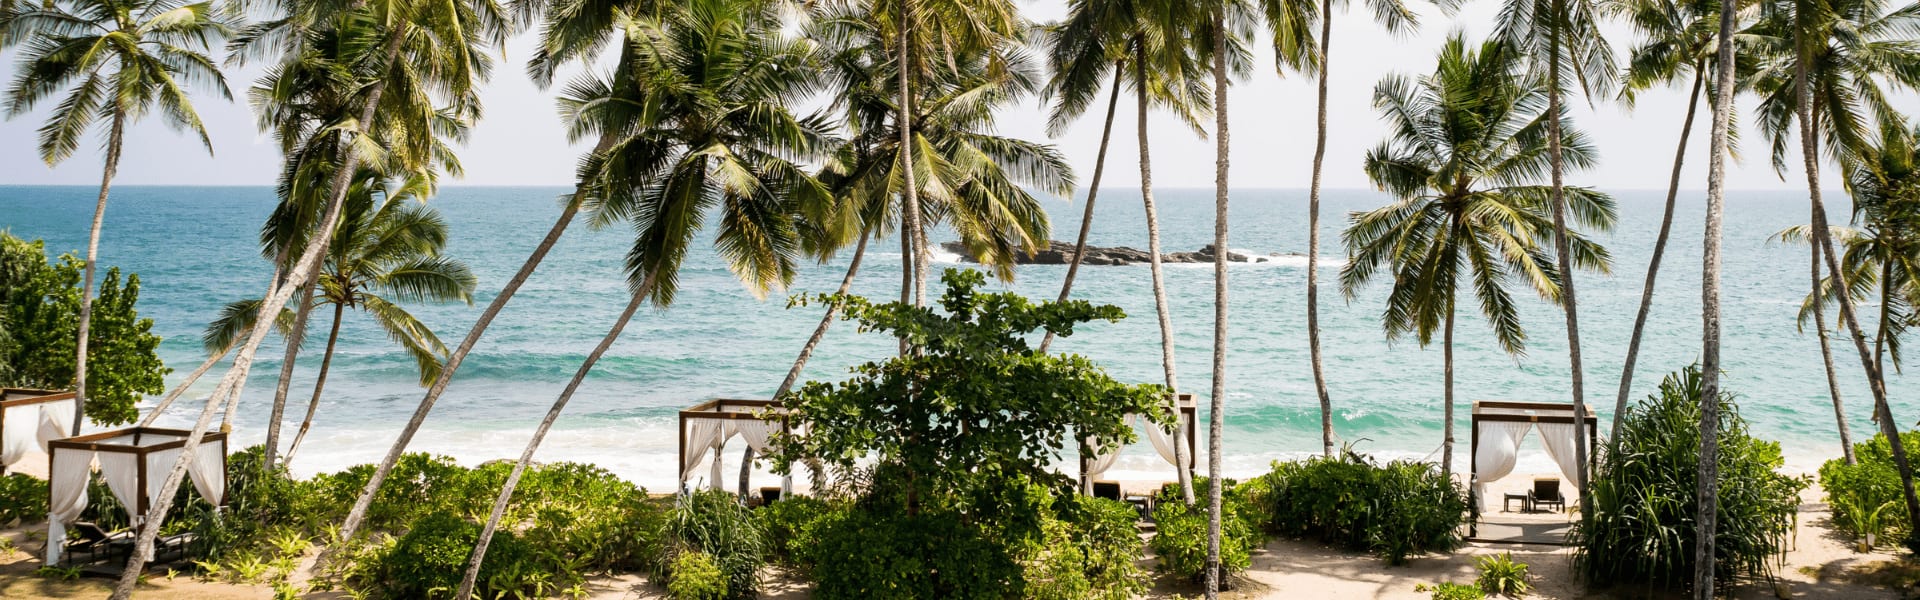 Your Gateway to Exotic Zanzibar Beach Adventures - Traverse Afrika